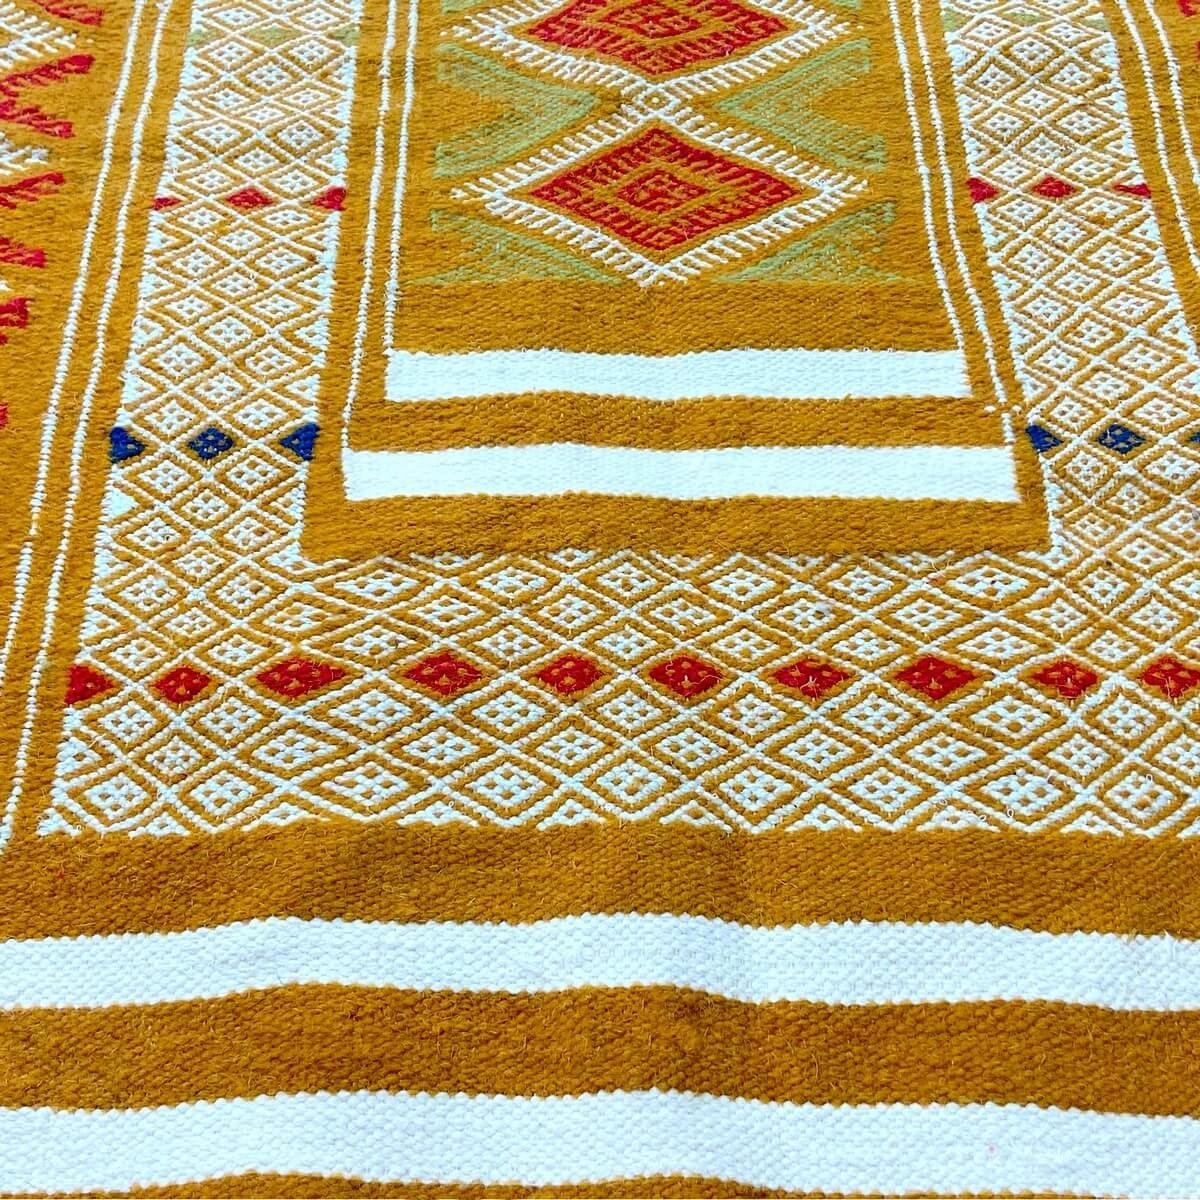 Berber tapijt Tapijt Kilim Tegiza 112x200 Geel/Wit (Handgeweven, Wol, Tunesië) Tunesisch kilimdeken, Marokkaanse stijl. Rechthoe